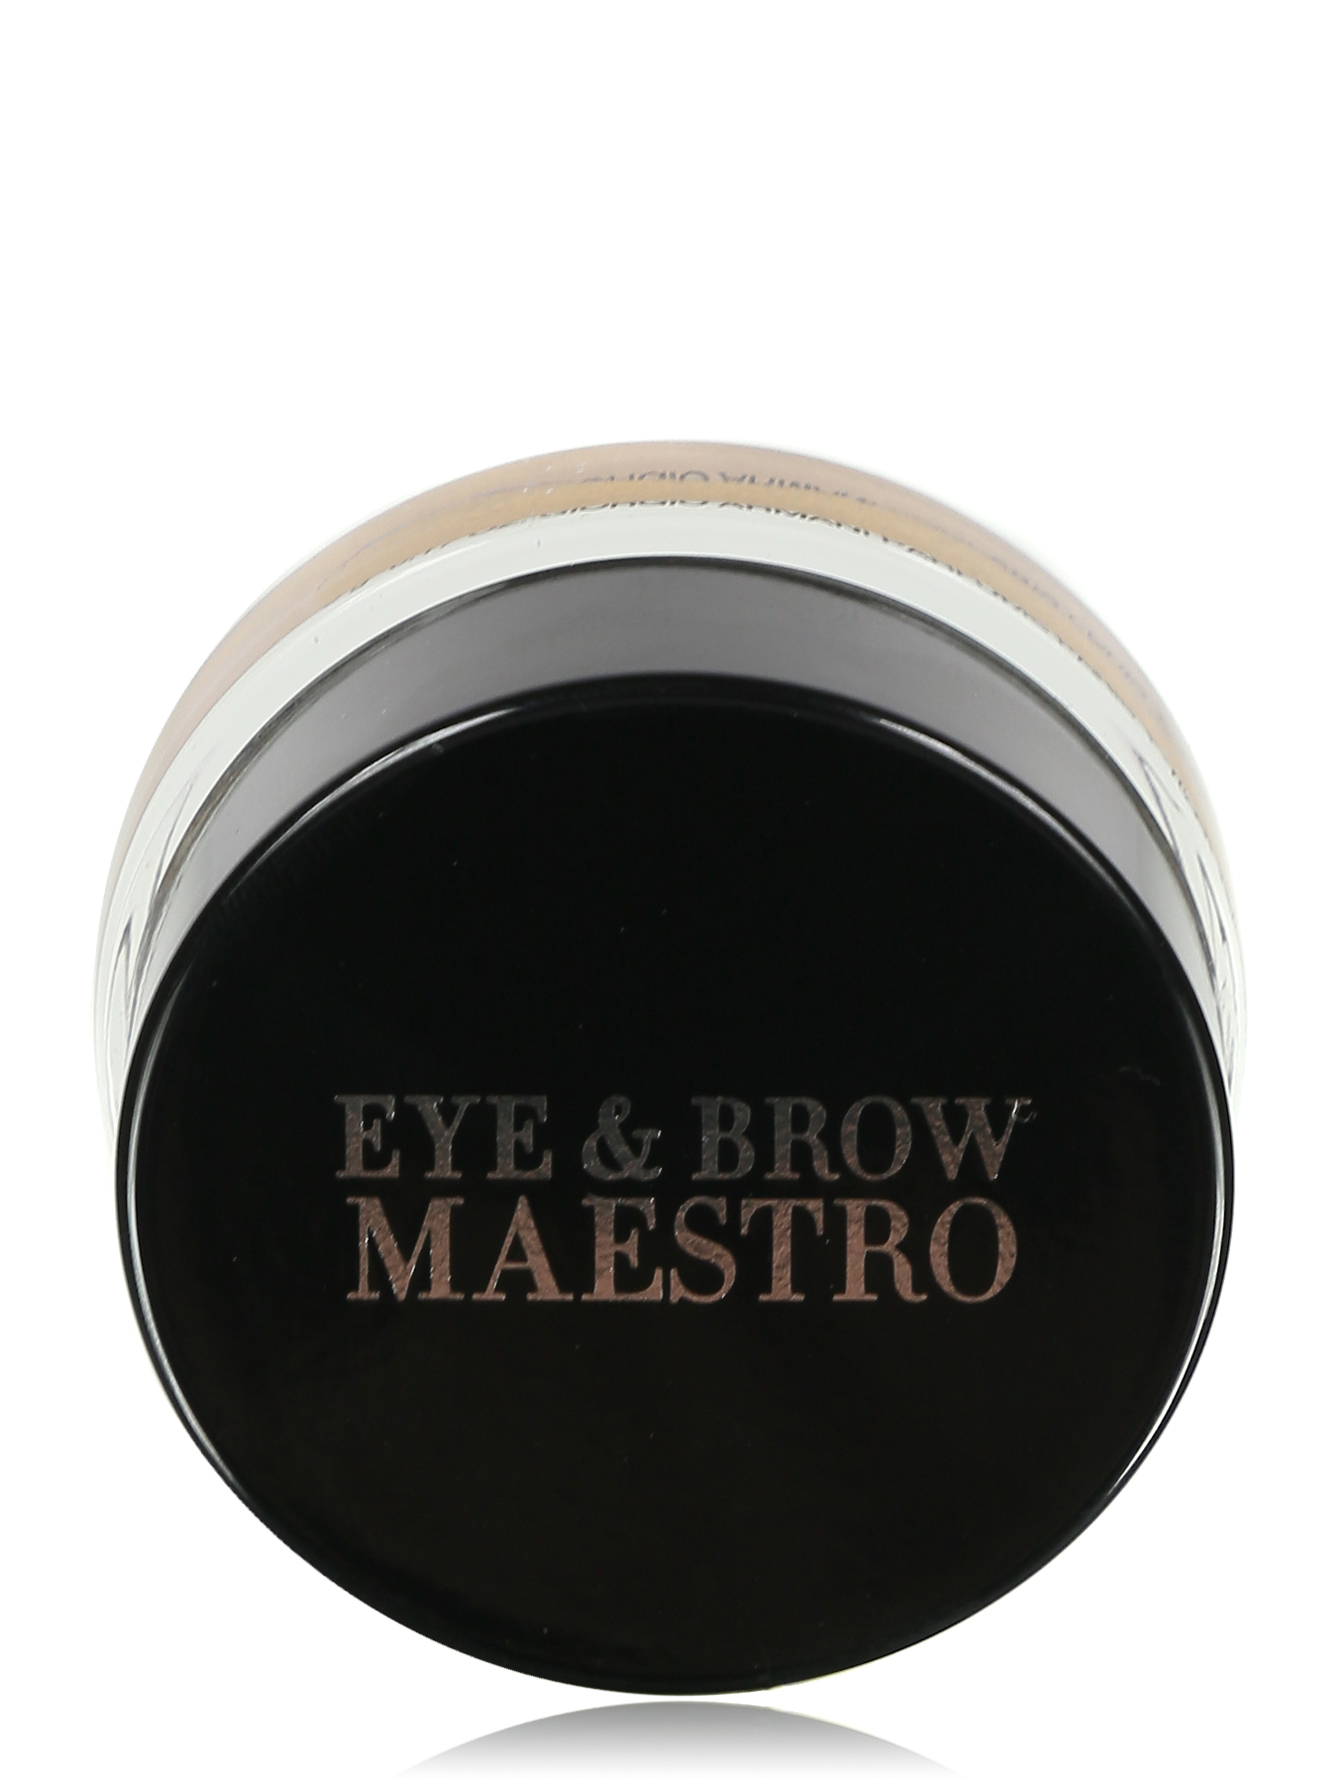  Средство для бровей и глаз - №9, Eye & Brow Maestro - Общий вид